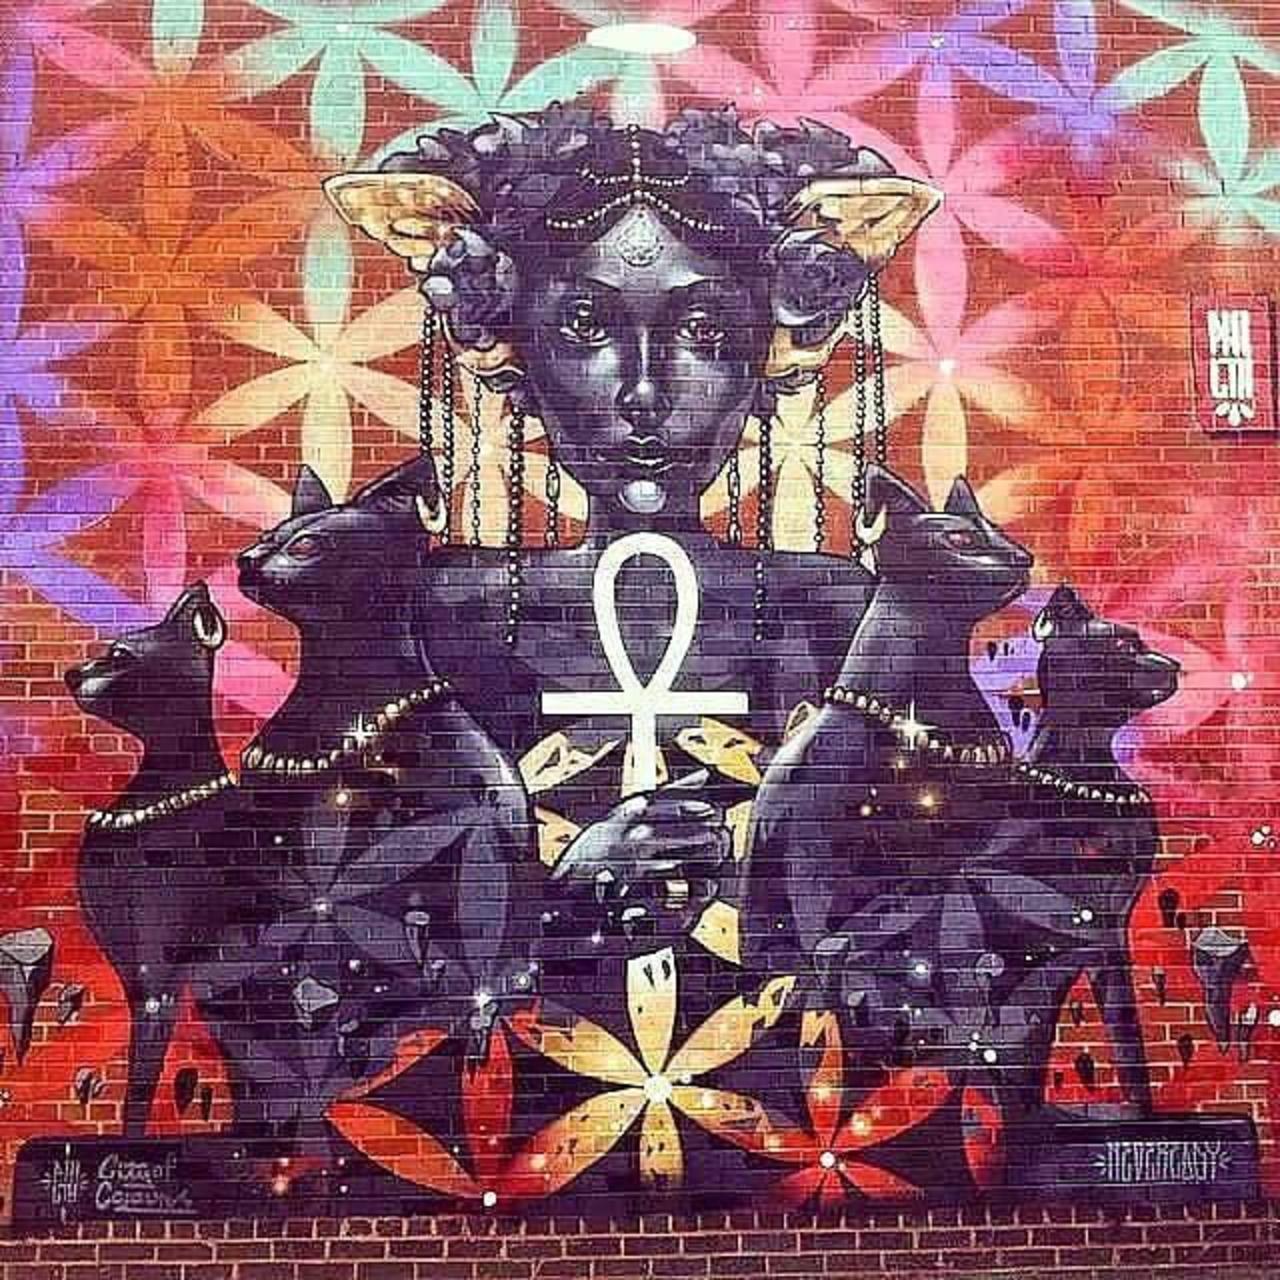 RT @TeaganDaner: Something about this piece. #ankh #cats #streetart #graffiti #art #spraypaint #stencilart #la #losangeles #californ… http://t.co/jOHIQIwF1J